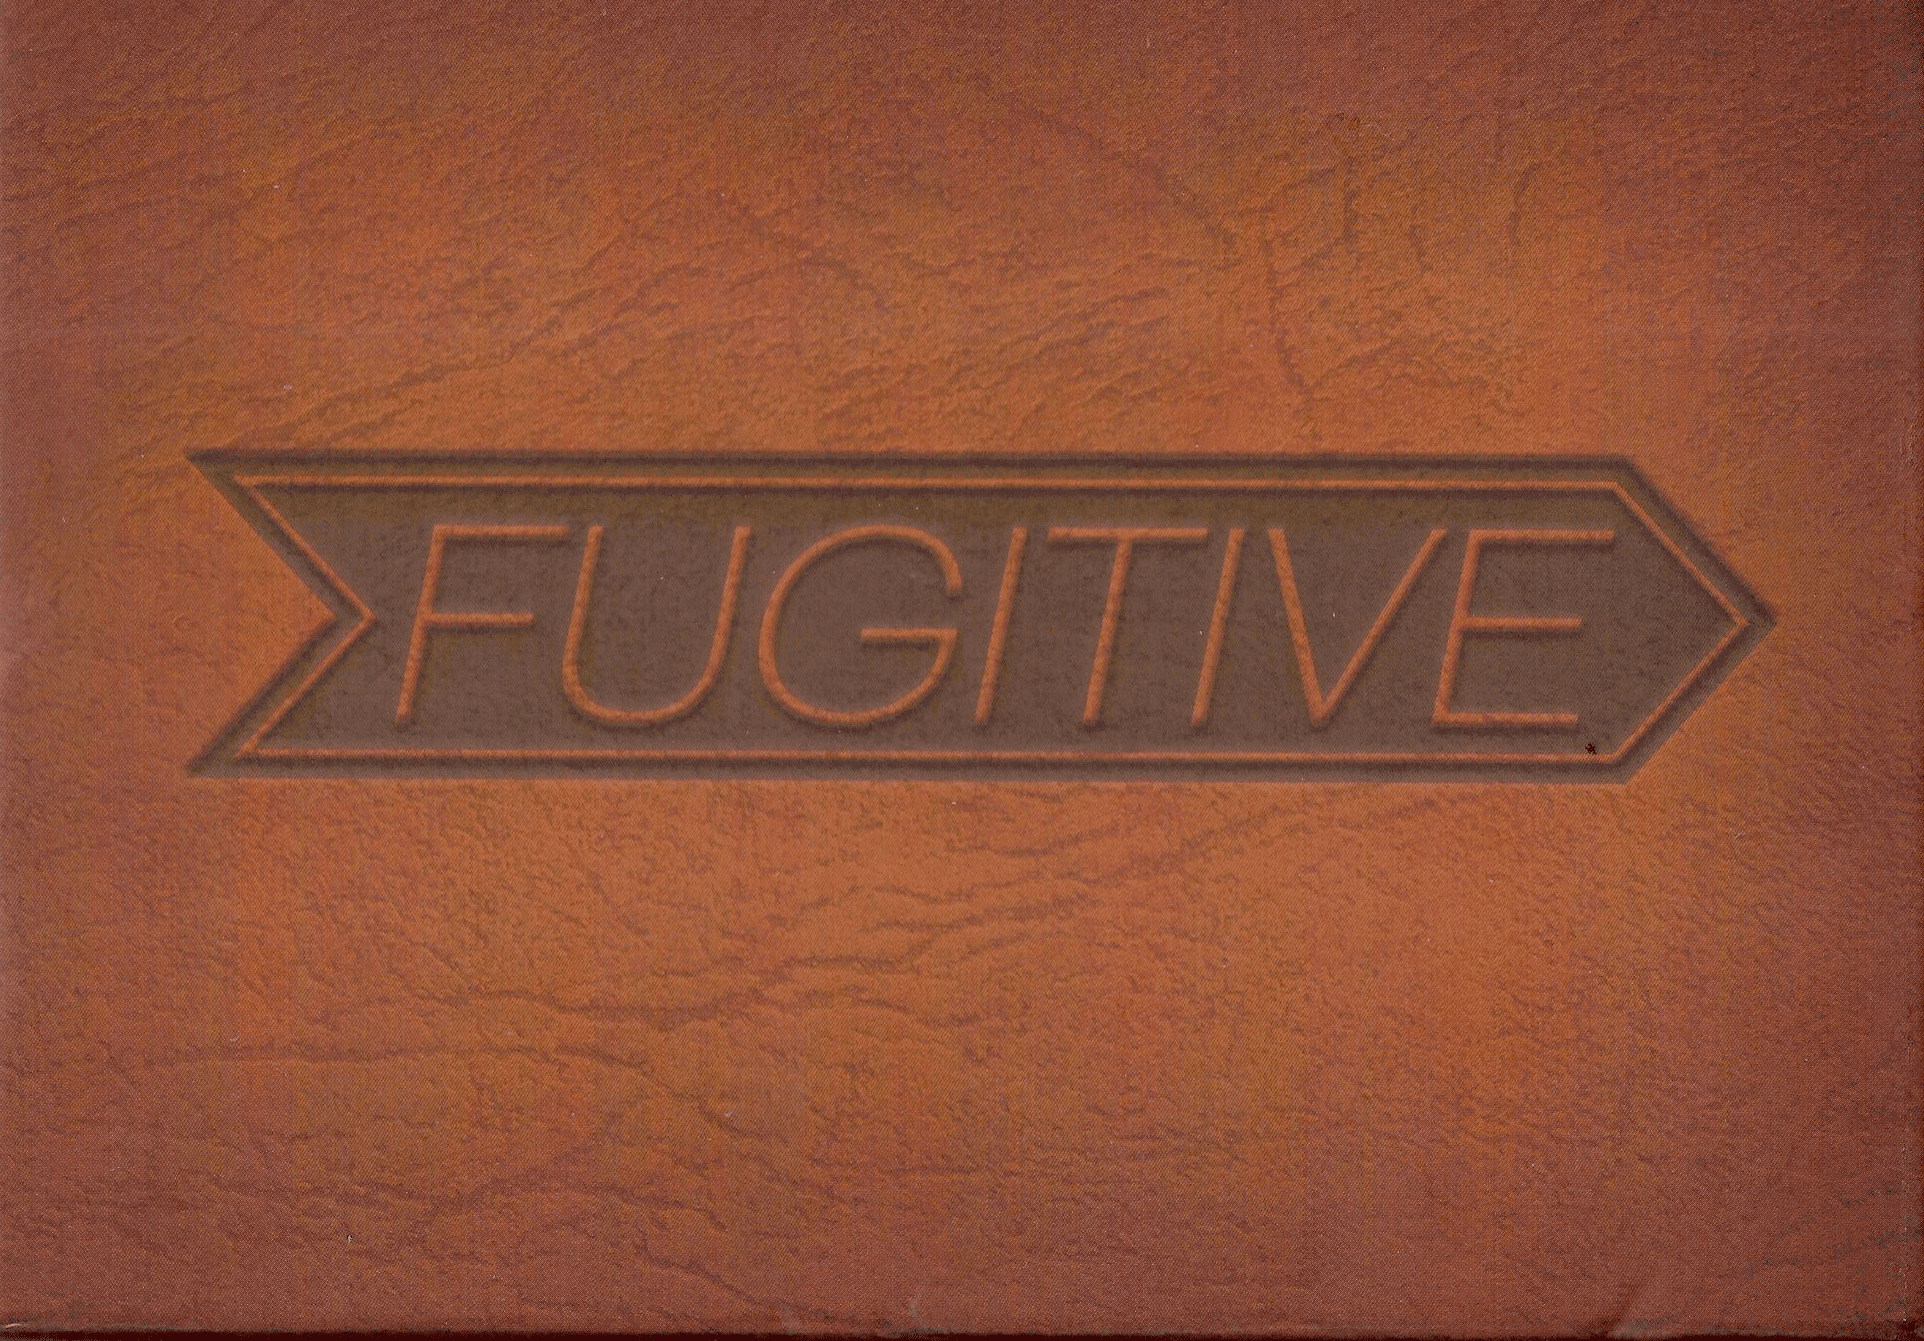 Fugitive